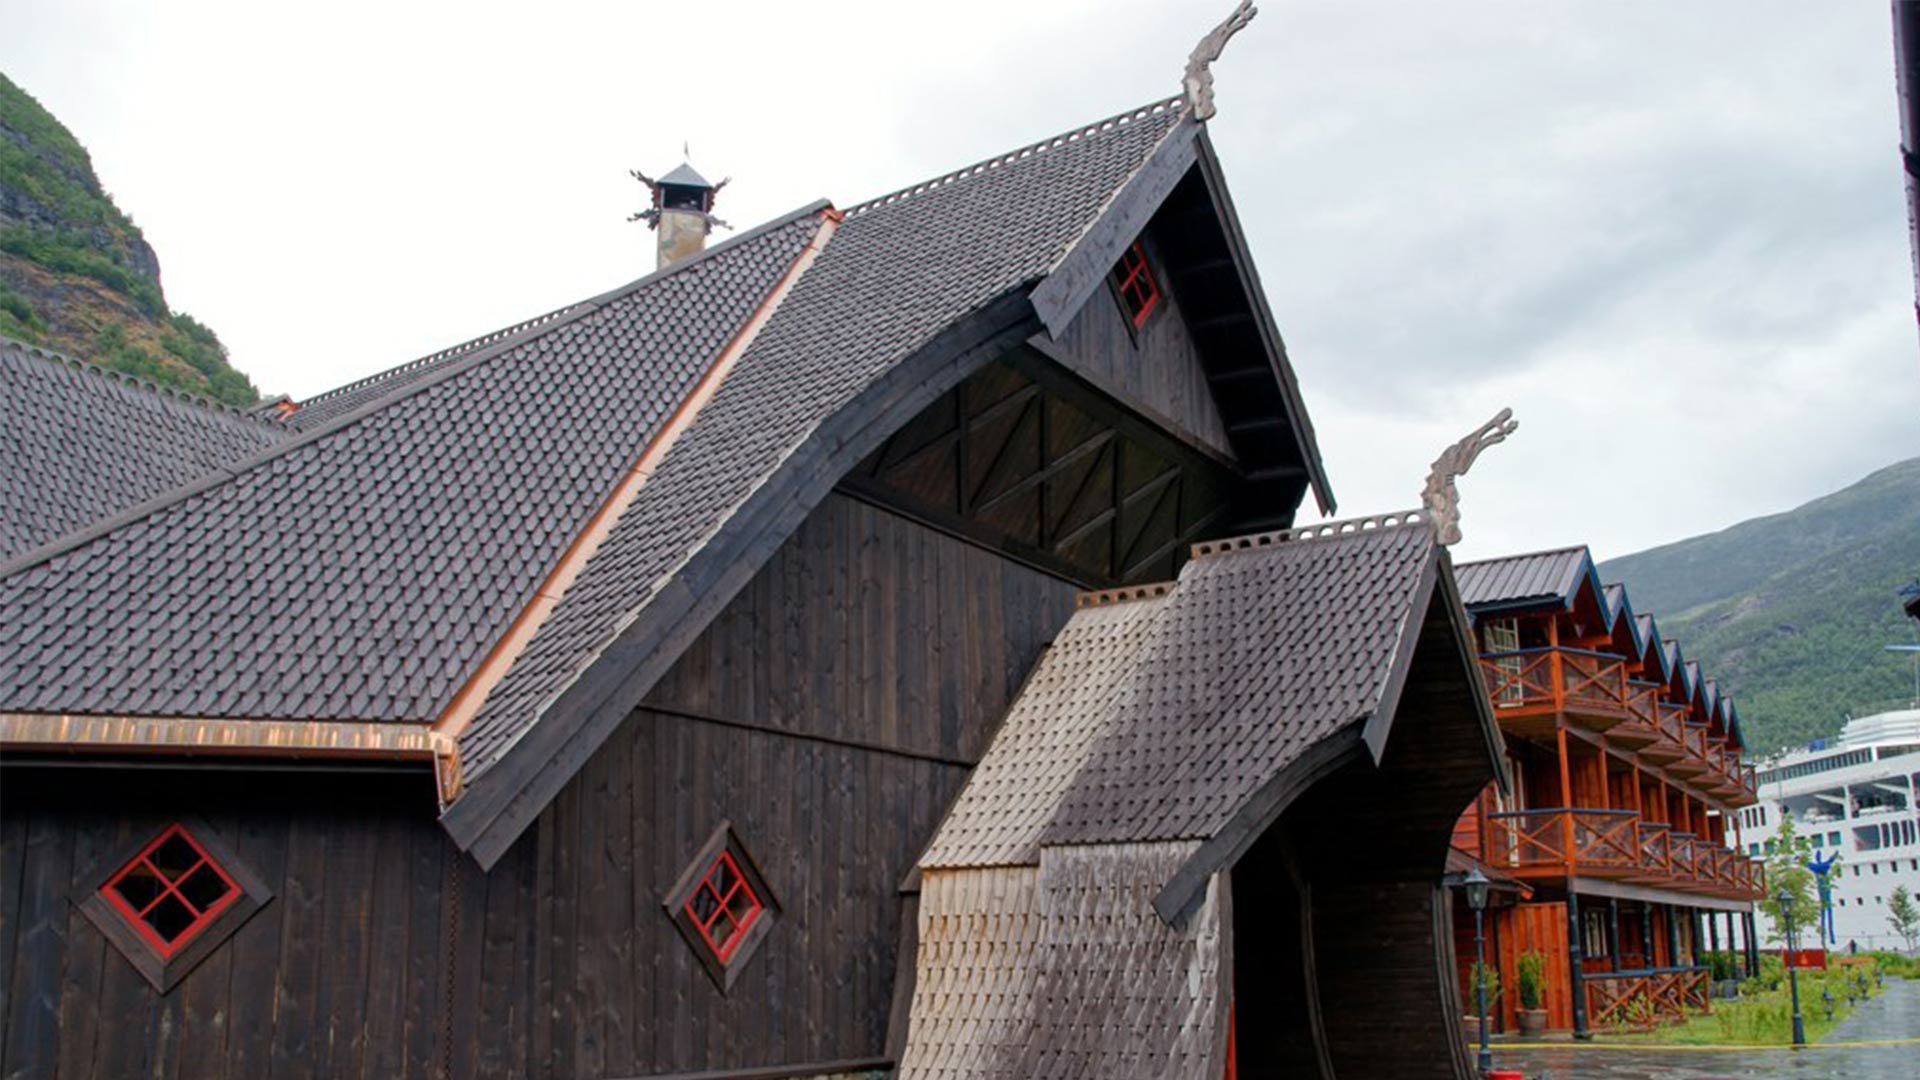 Aegir Bryggeri in Norway